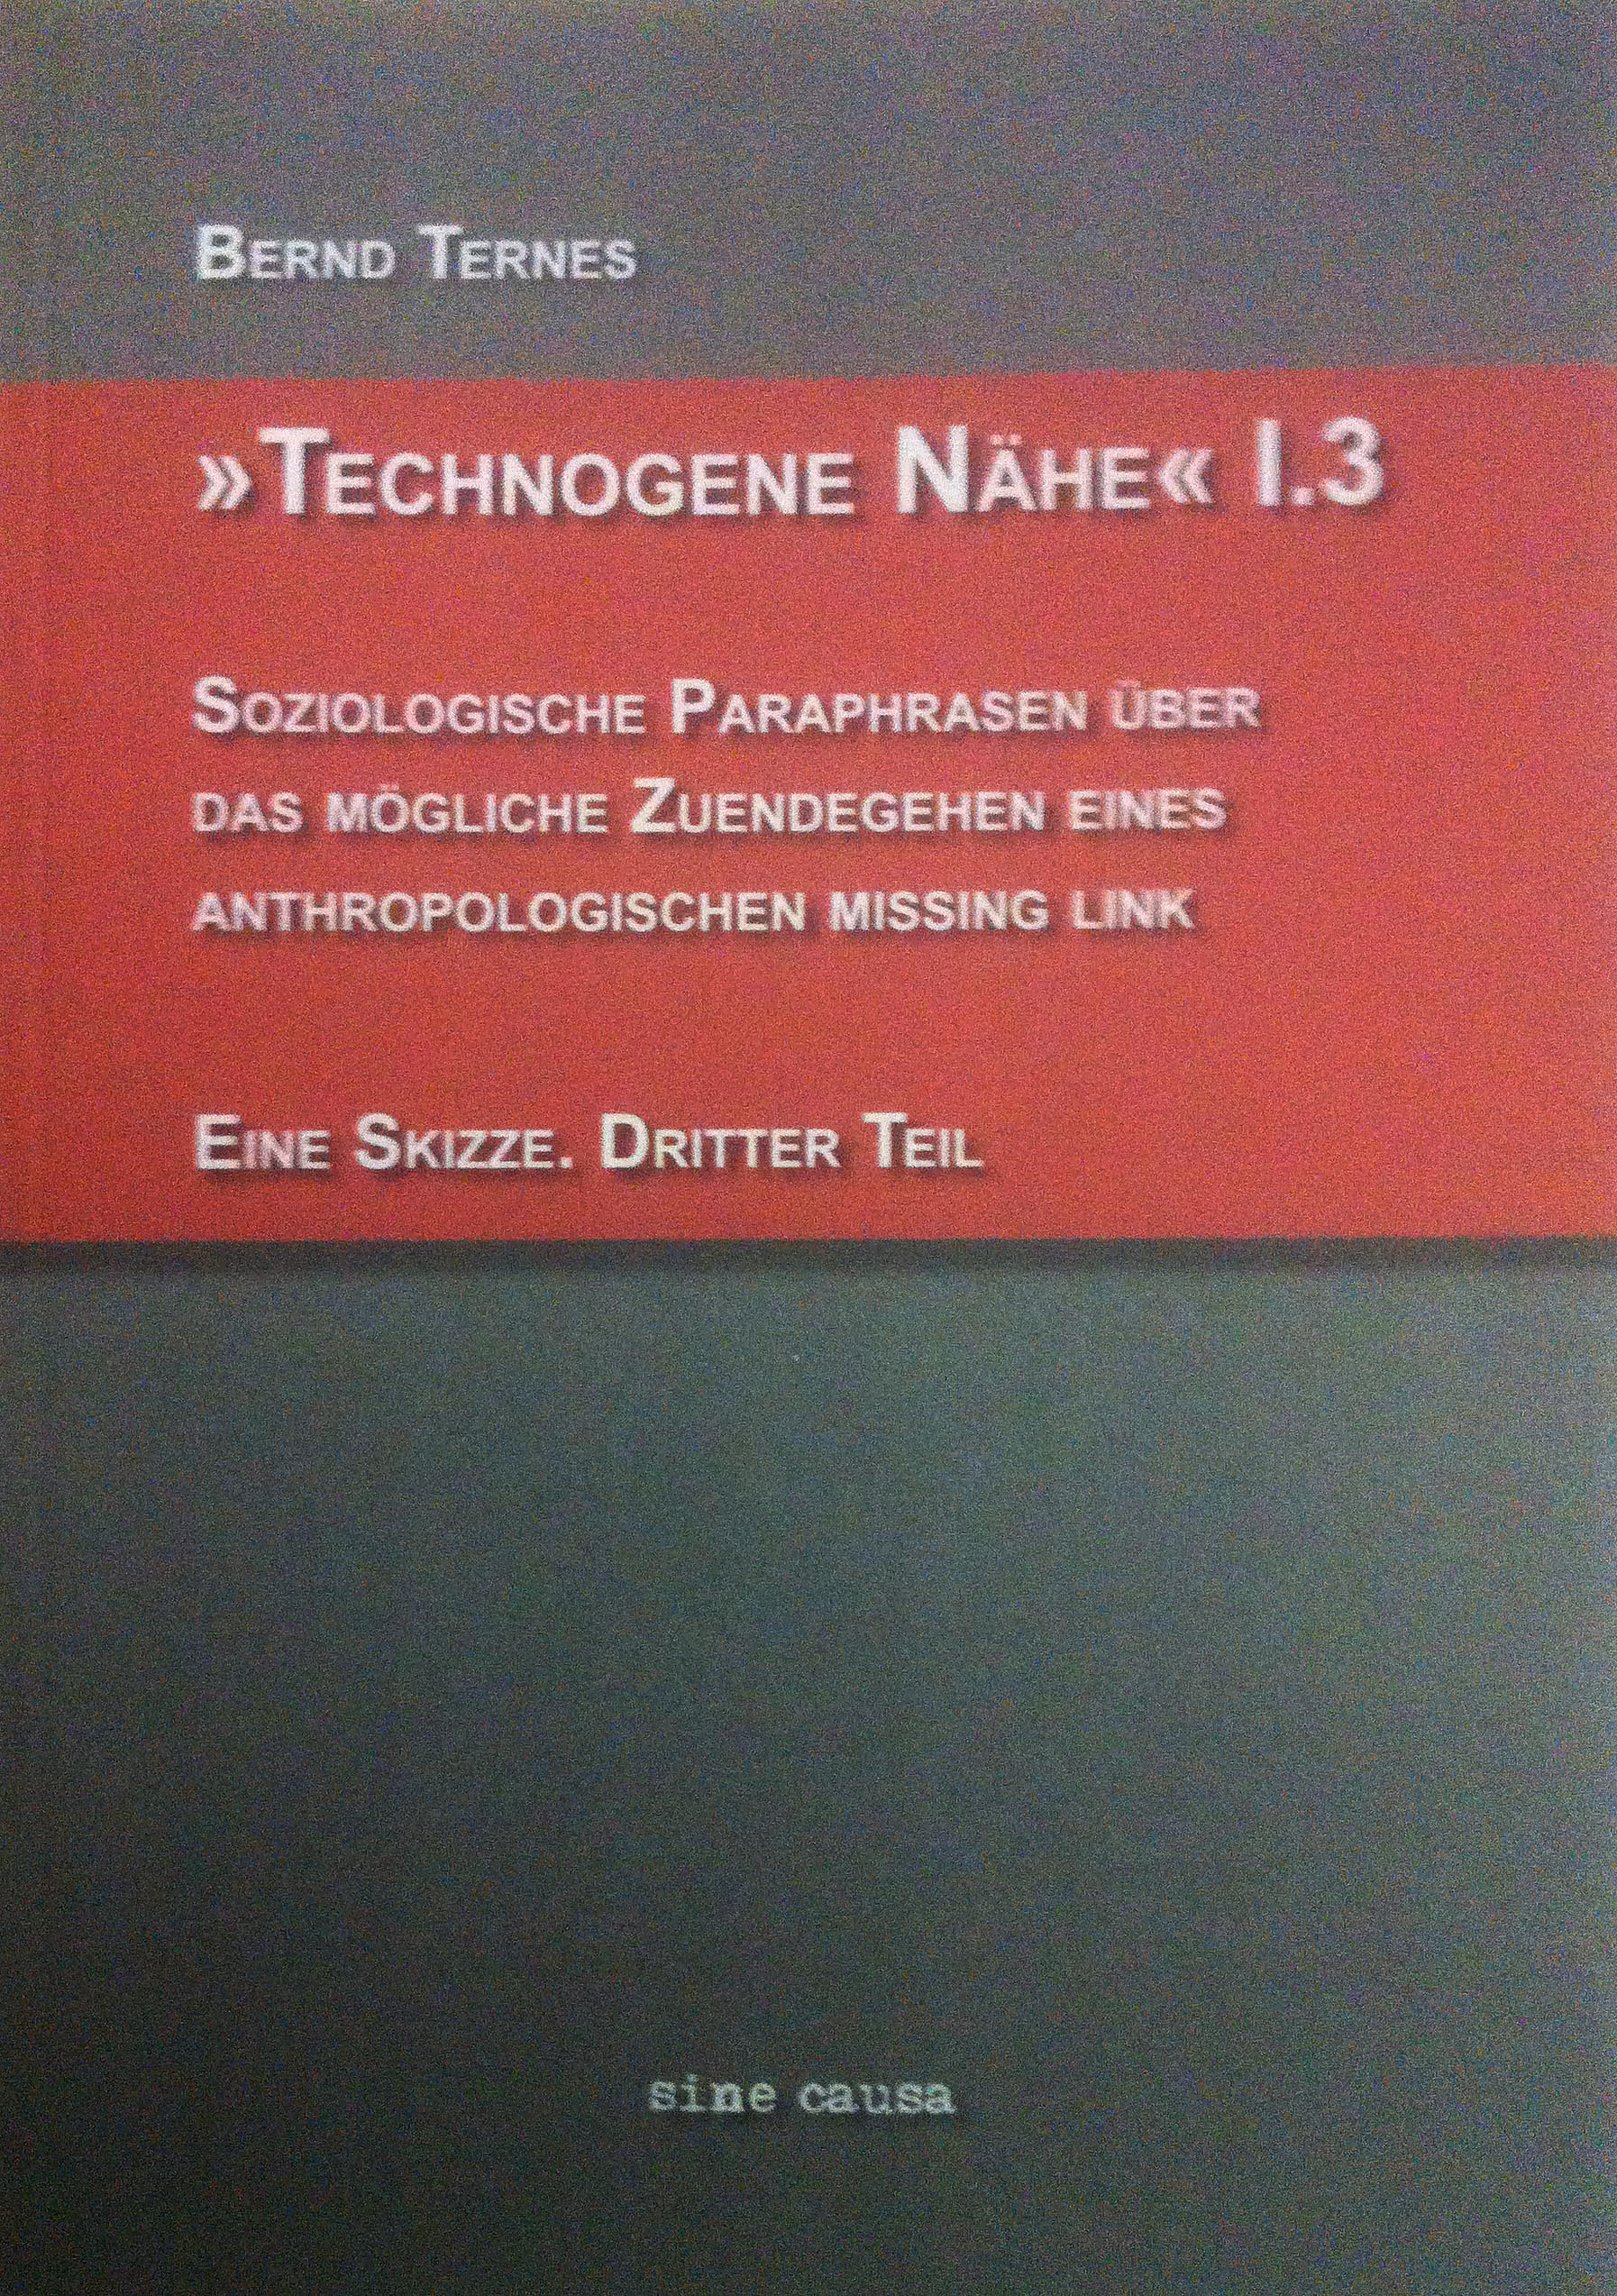 Bernd Ternes 'Technogene Nähe 1.3'